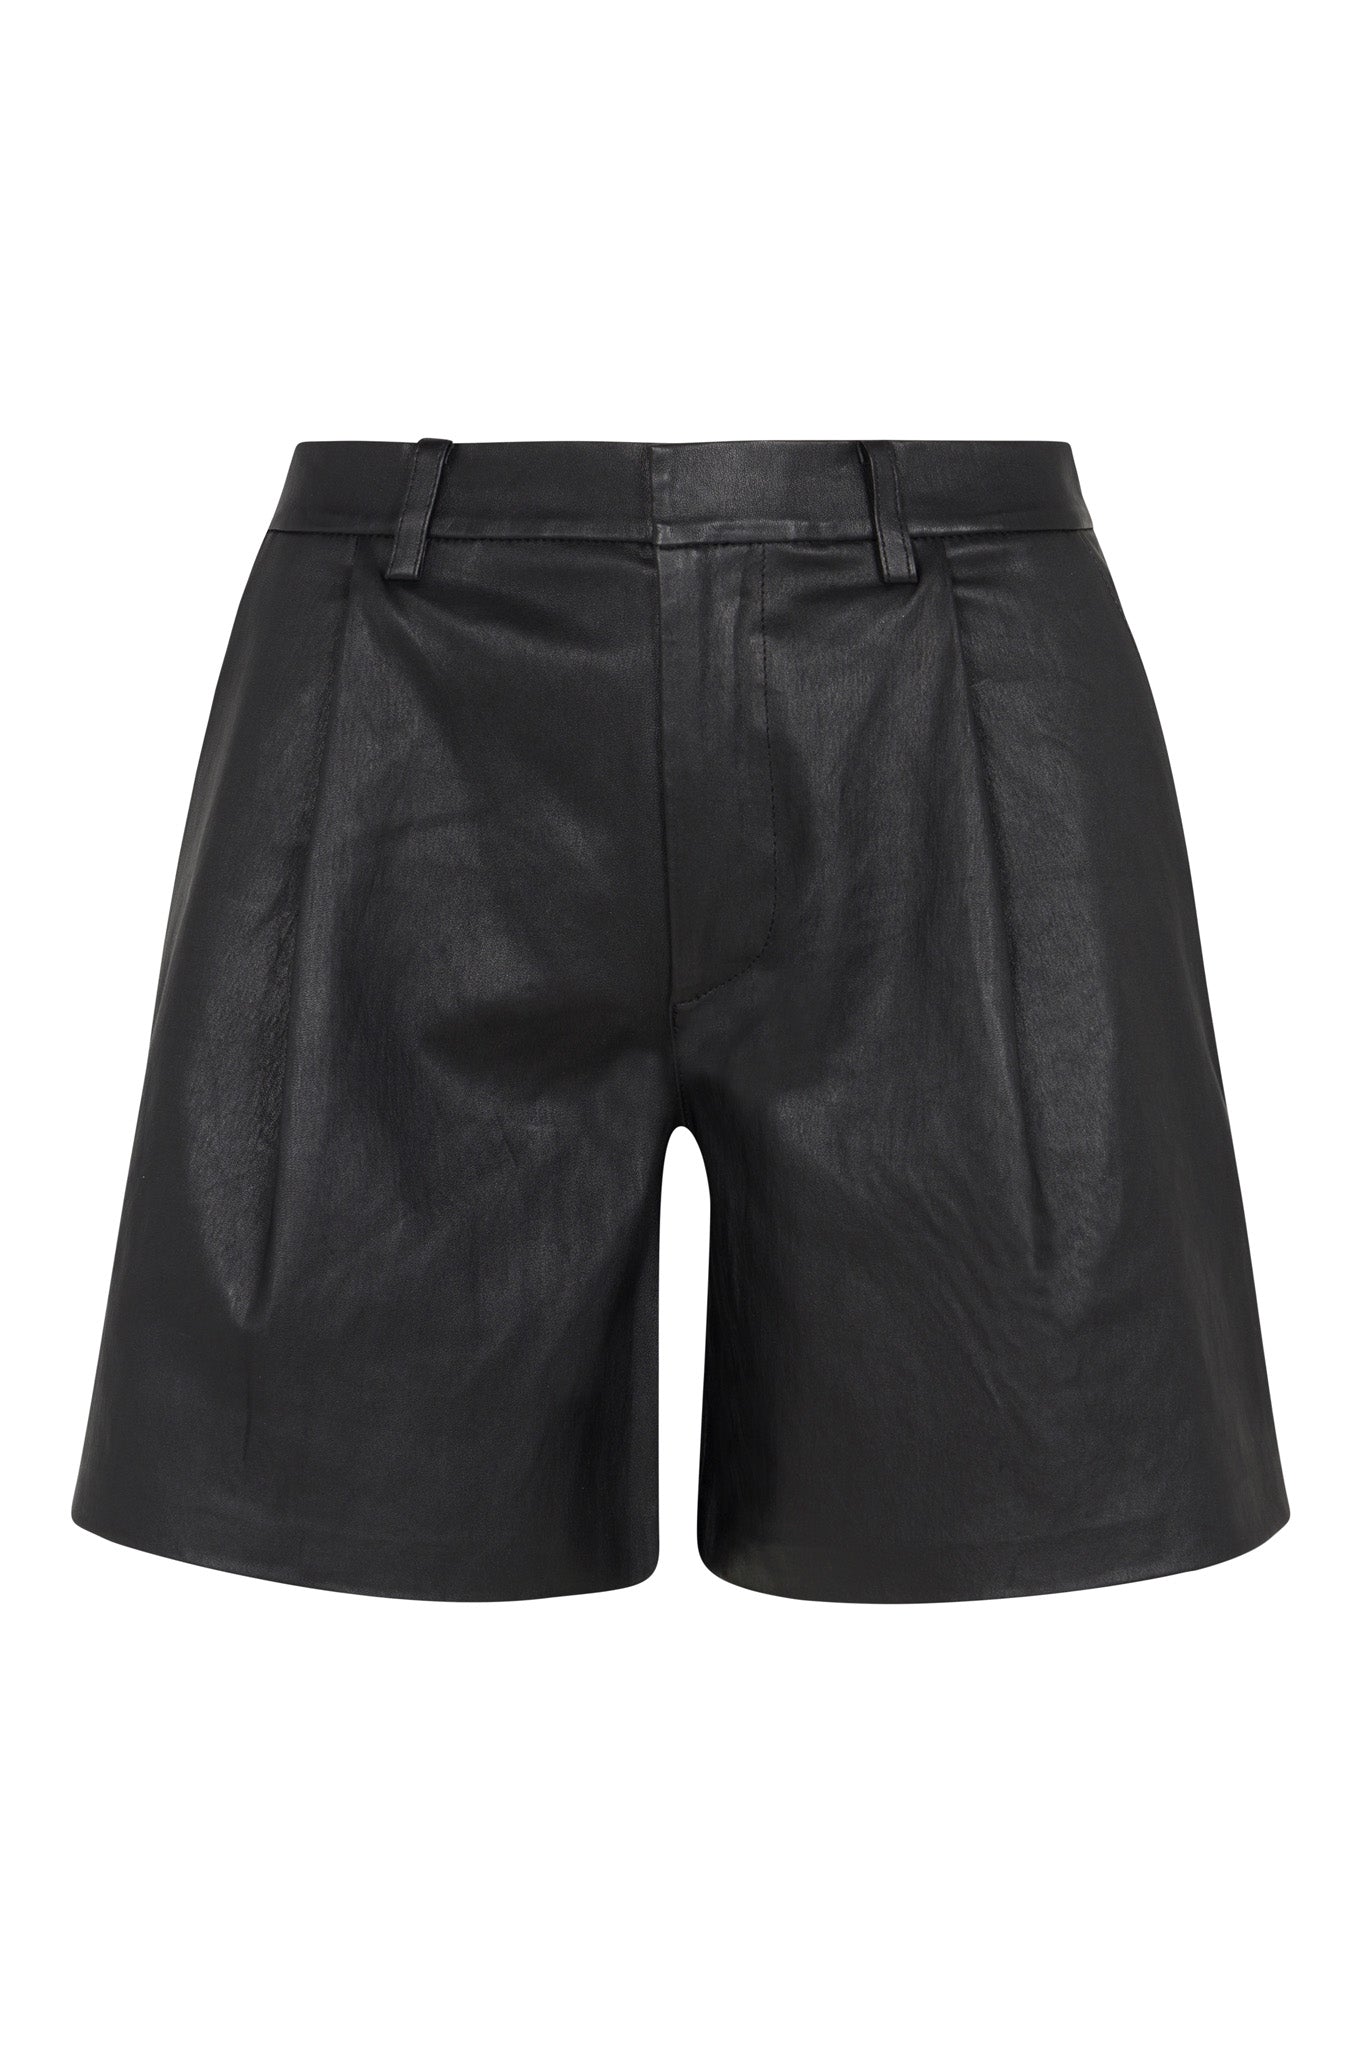 Black Leather Trouser Shorts